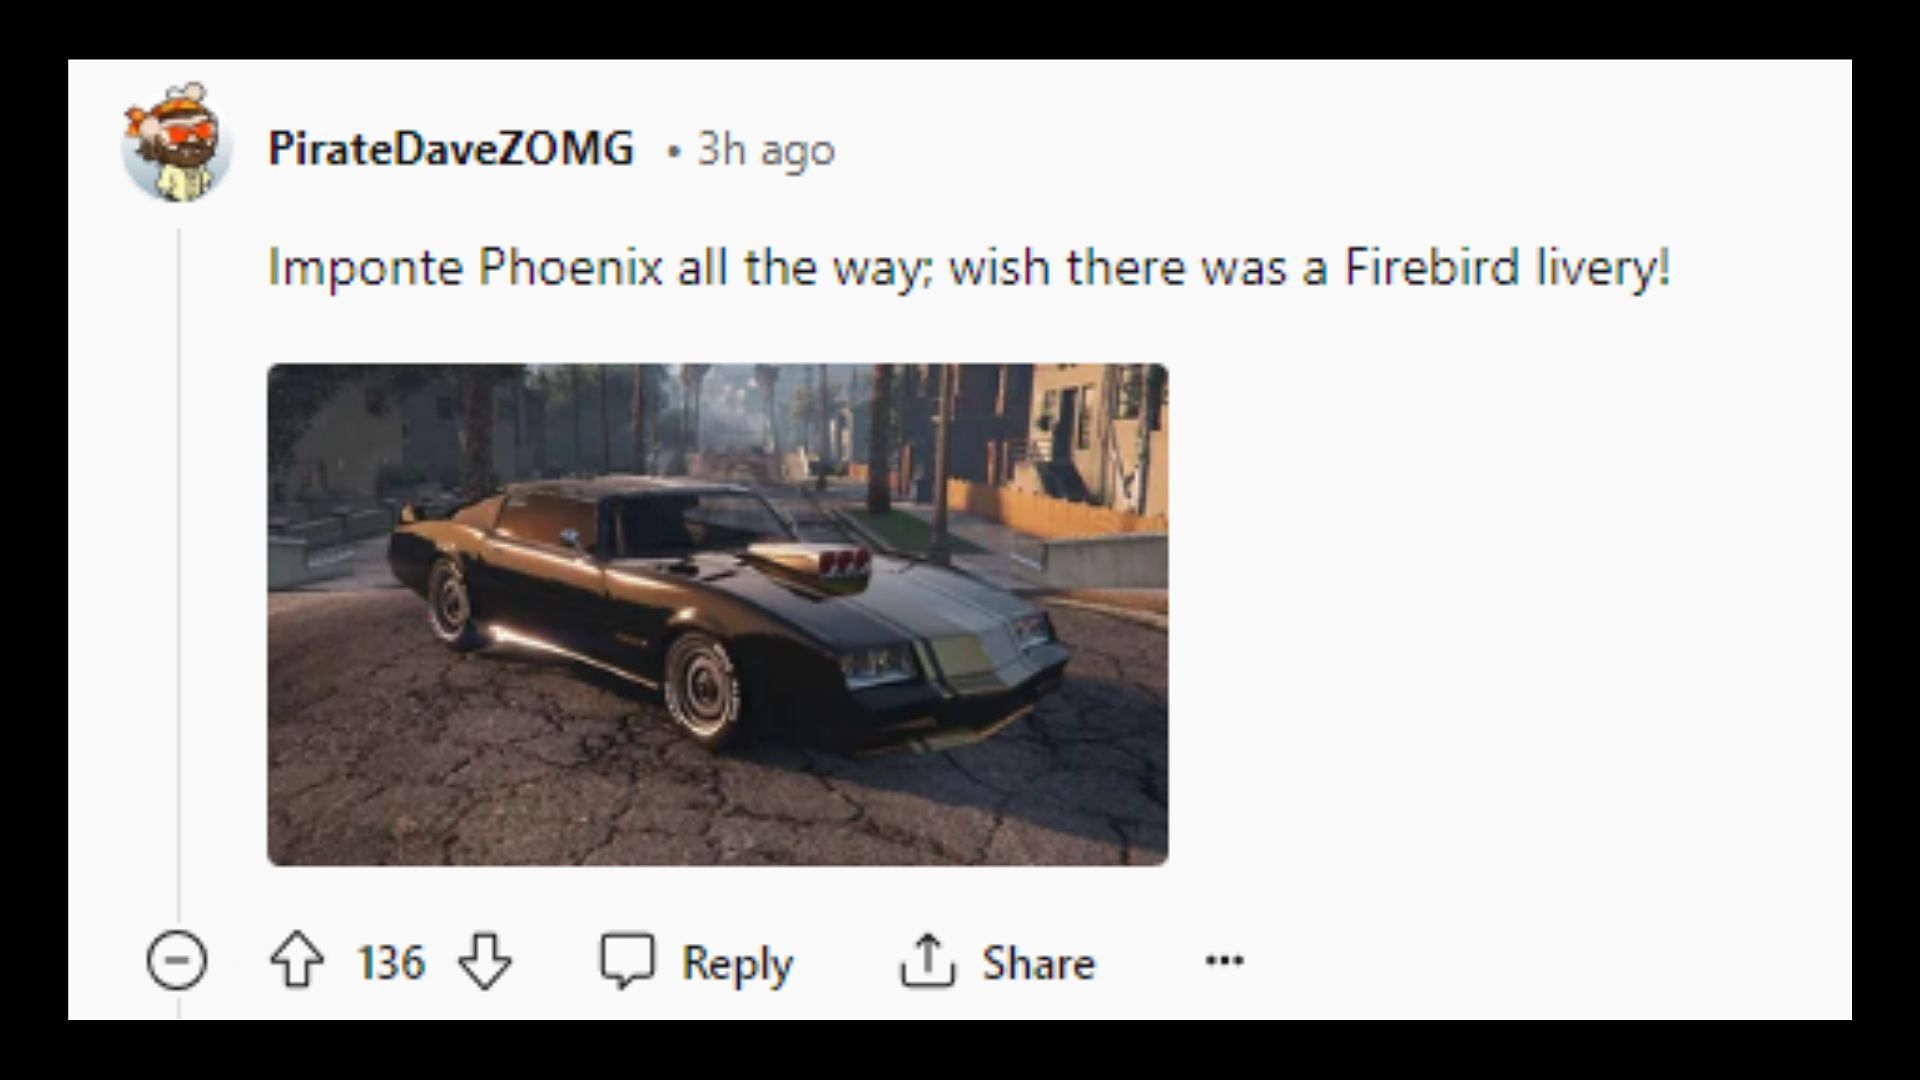 Imponte Phoenix is one of the rarest GTA Online cars (Image via Reddit: u/PirateDaveZOMG)